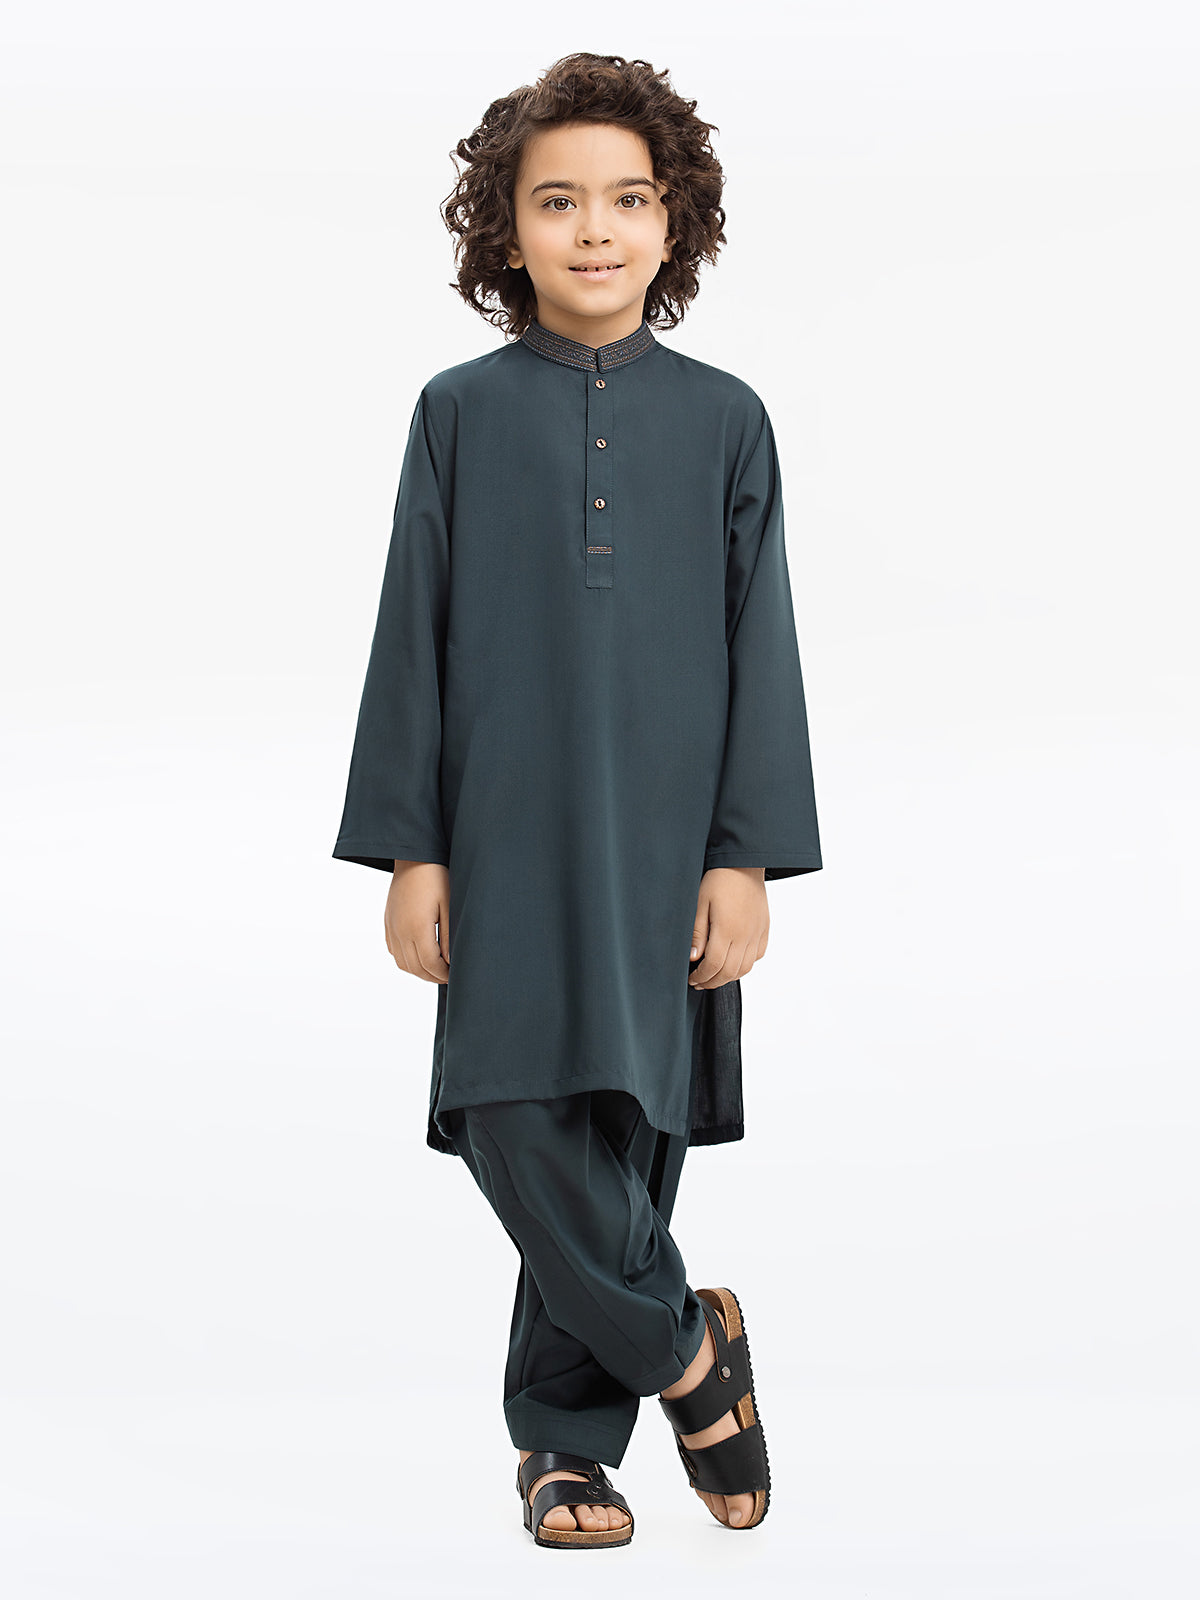 Boy's Green Kurta Shalwar - EBTKS24-3949